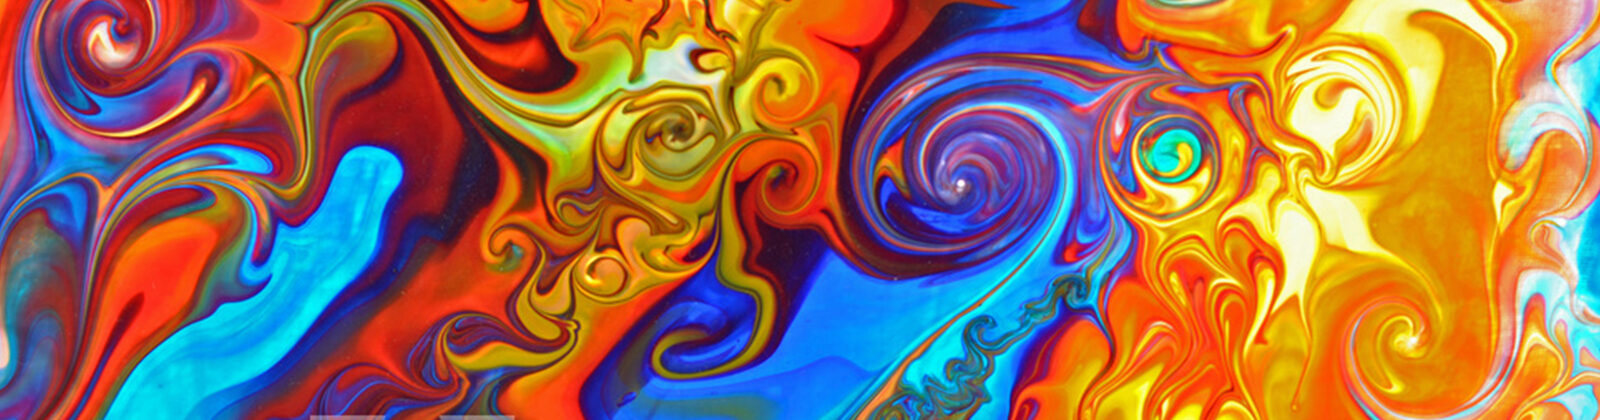 bright colorful swirls